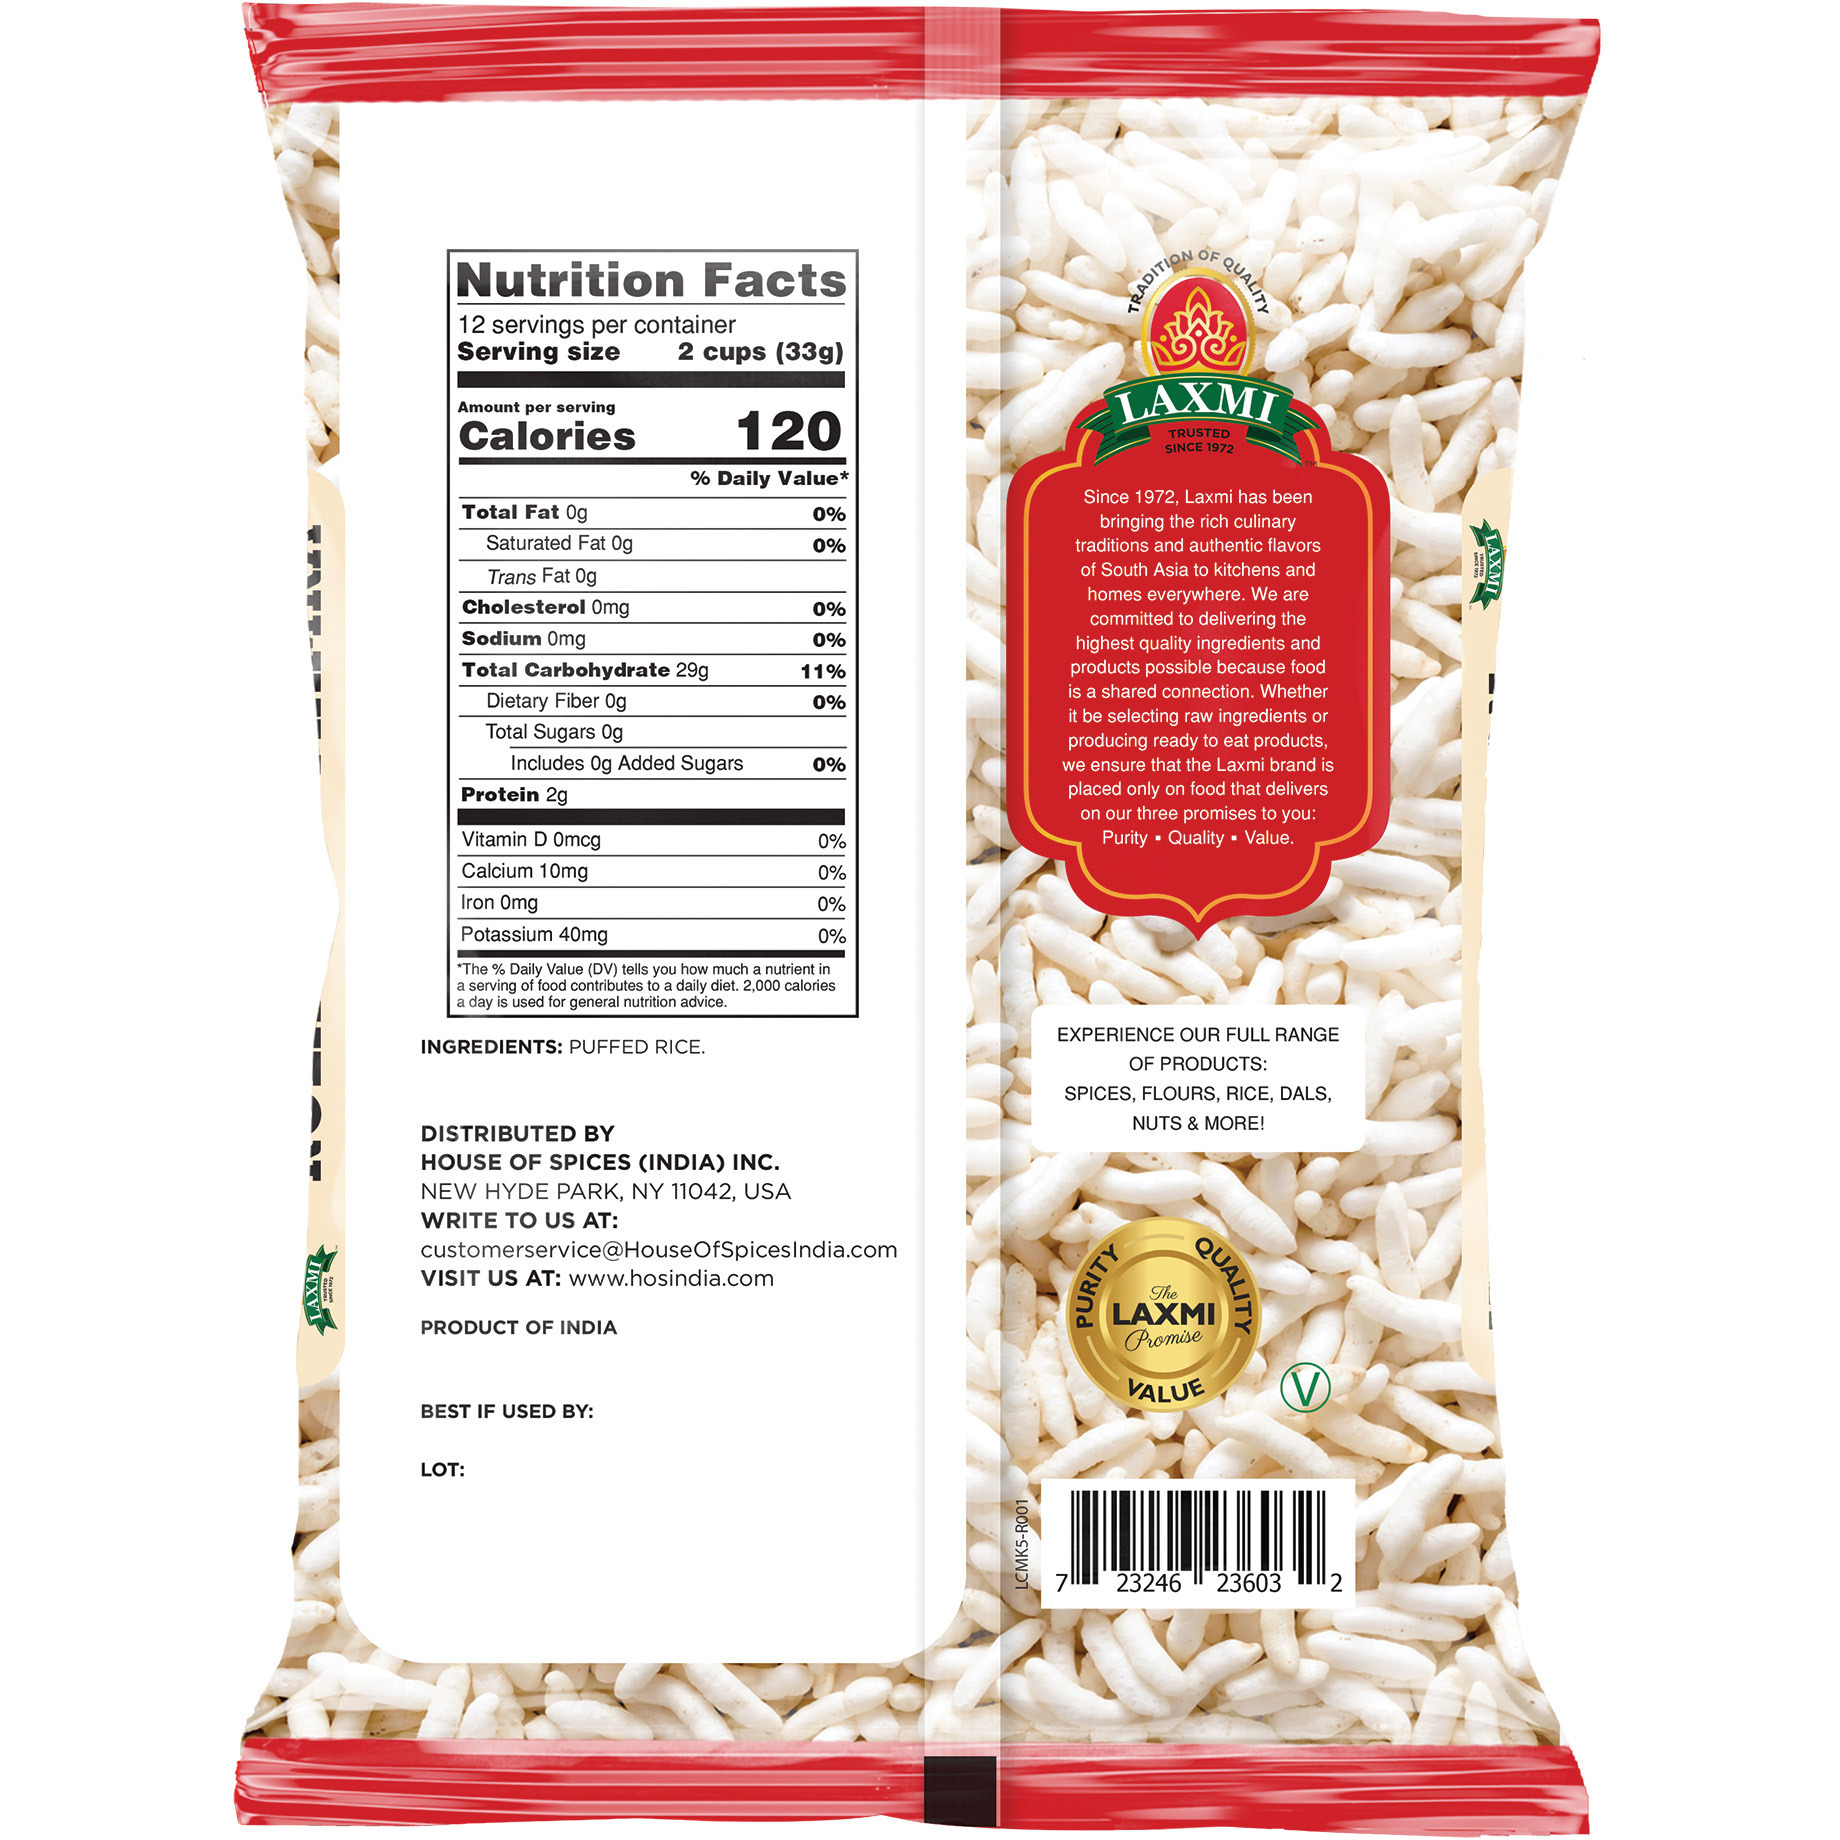 Laxmi Kolhapuri Mamra Puffed Rice - 400 Gm (14 Oz)